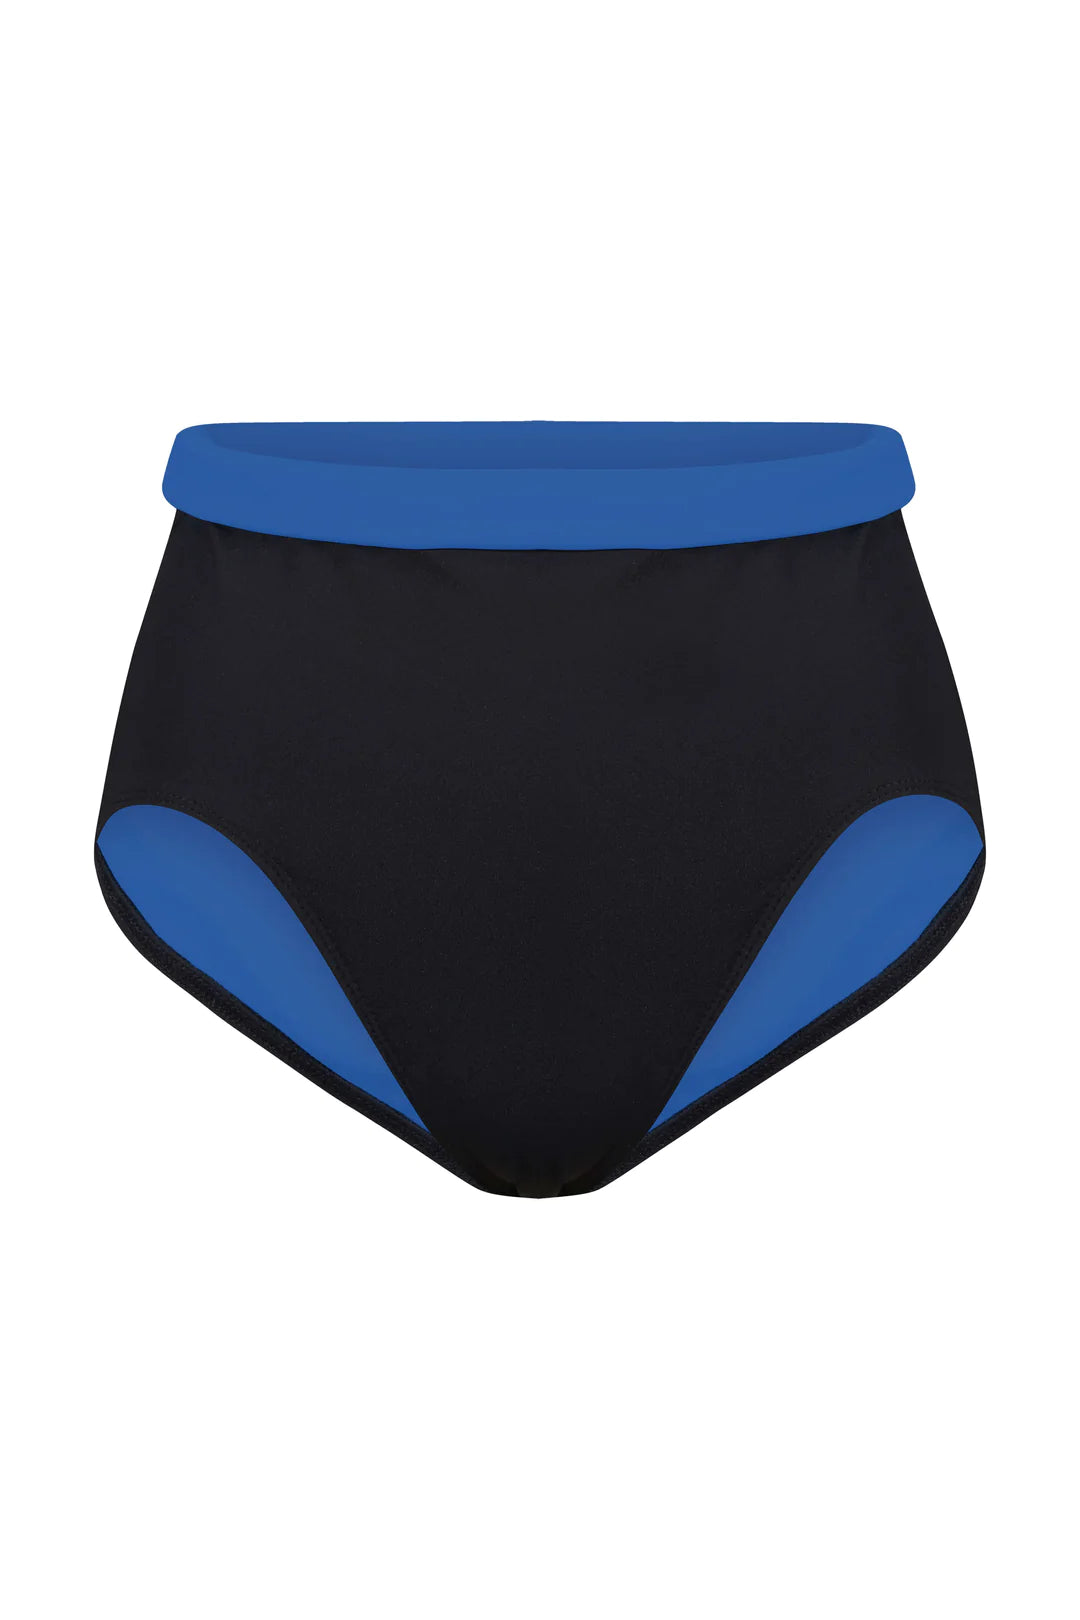 Davy J - The Jones High Leg Bikini Briefs - Black/Blue